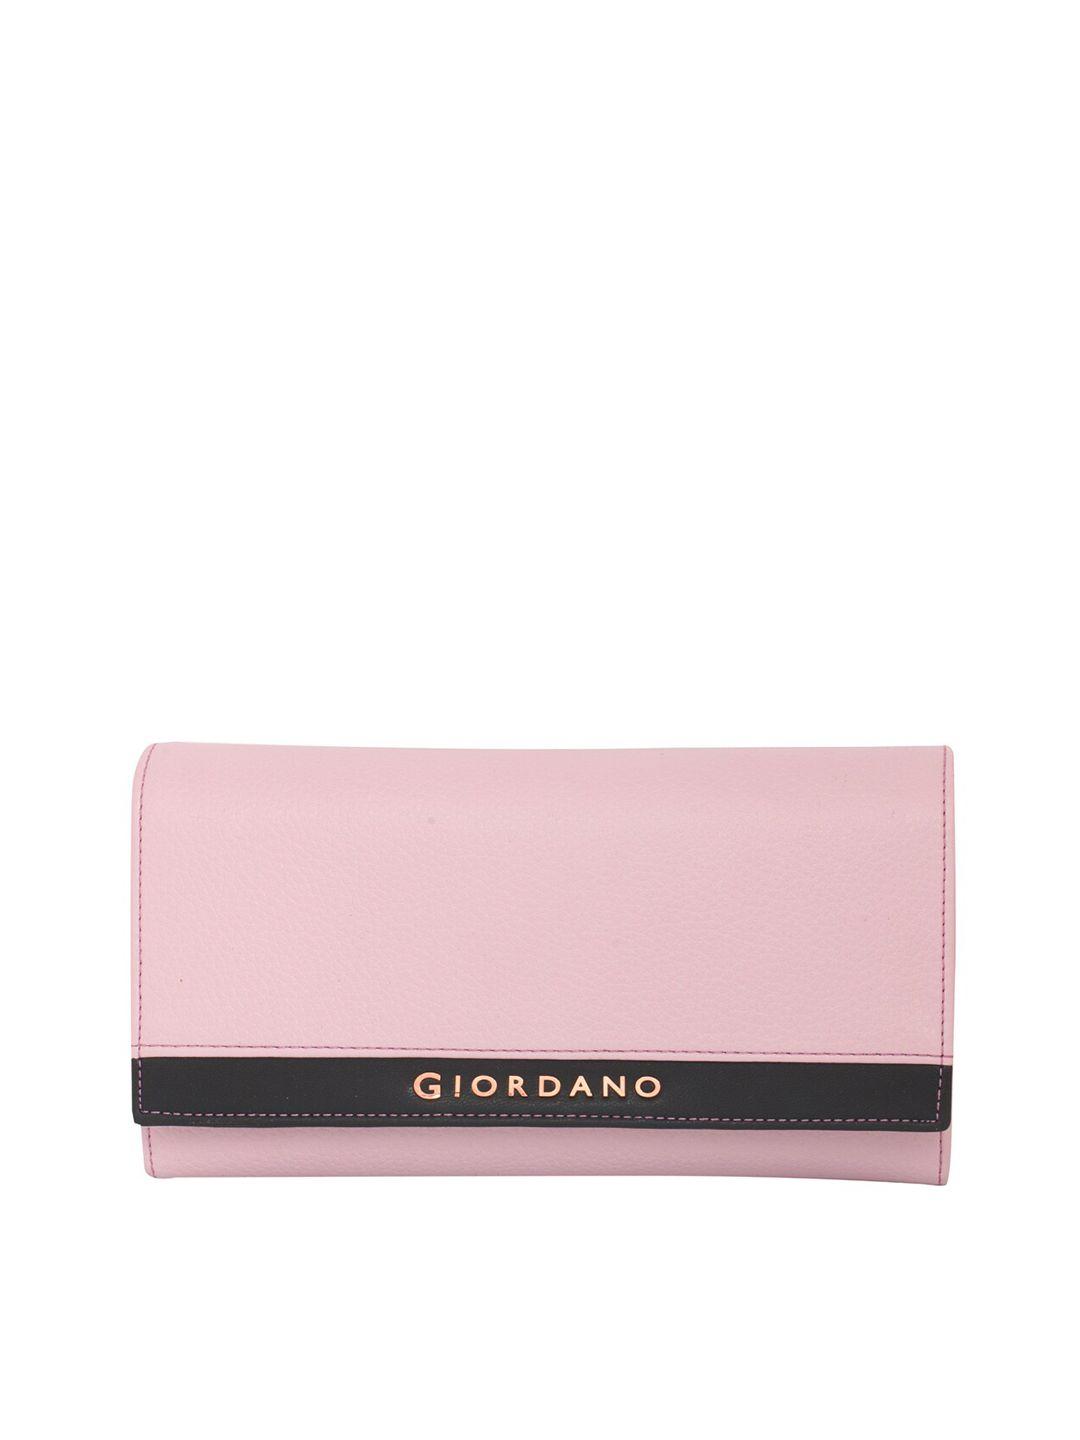 giordano women pink & black textured pu envelope